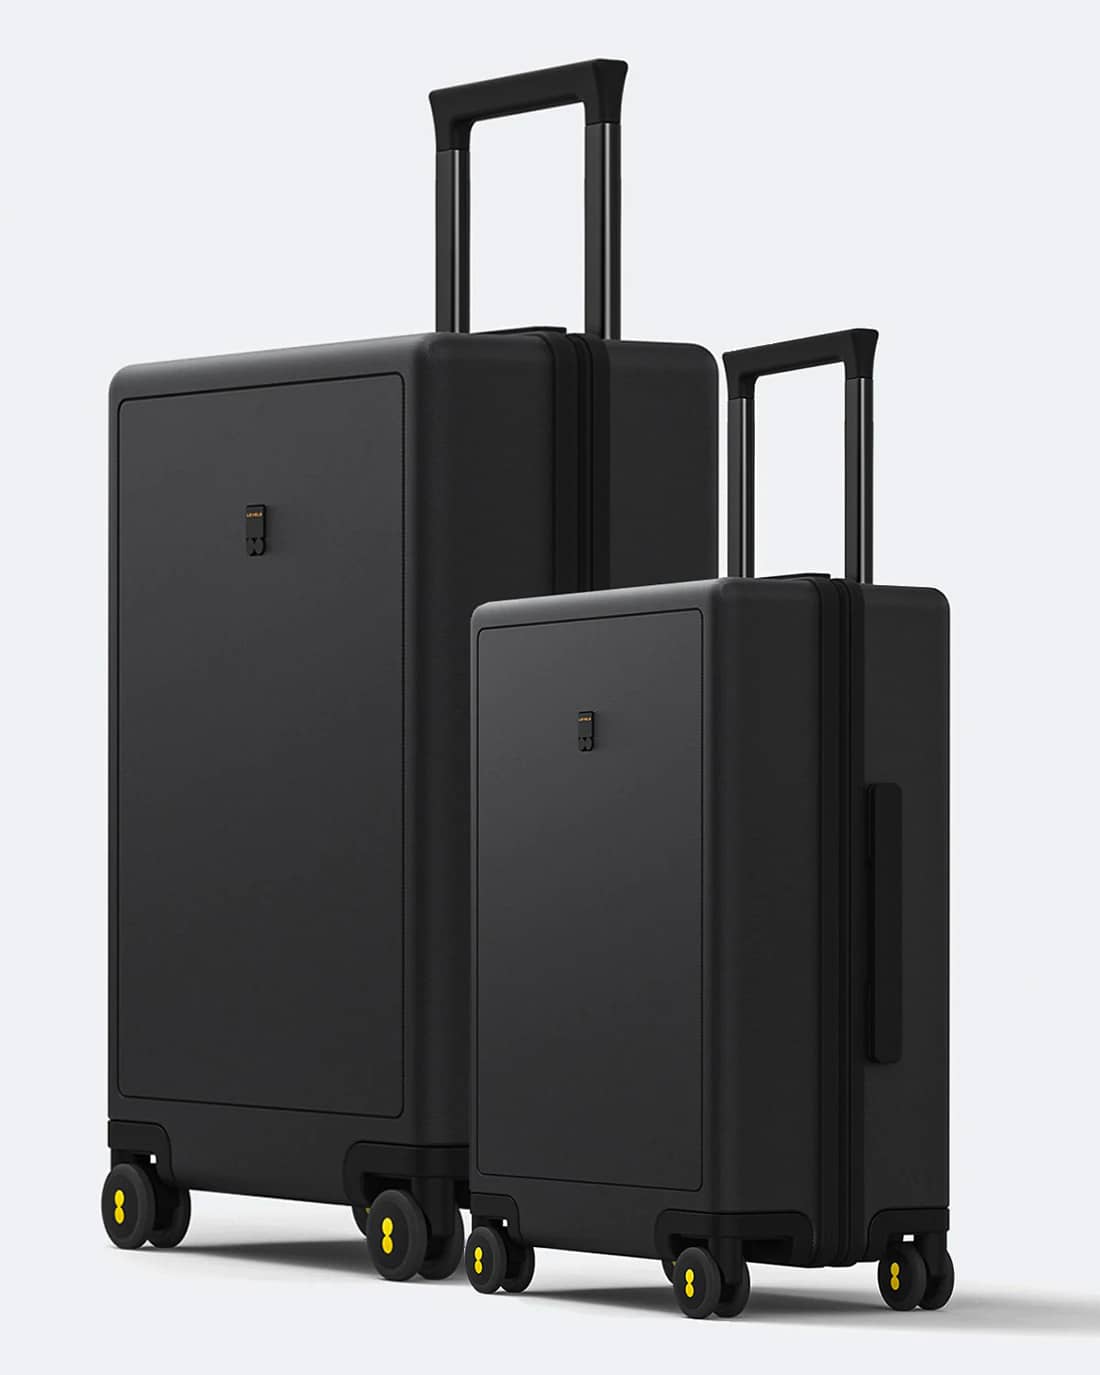 Modern luggage set